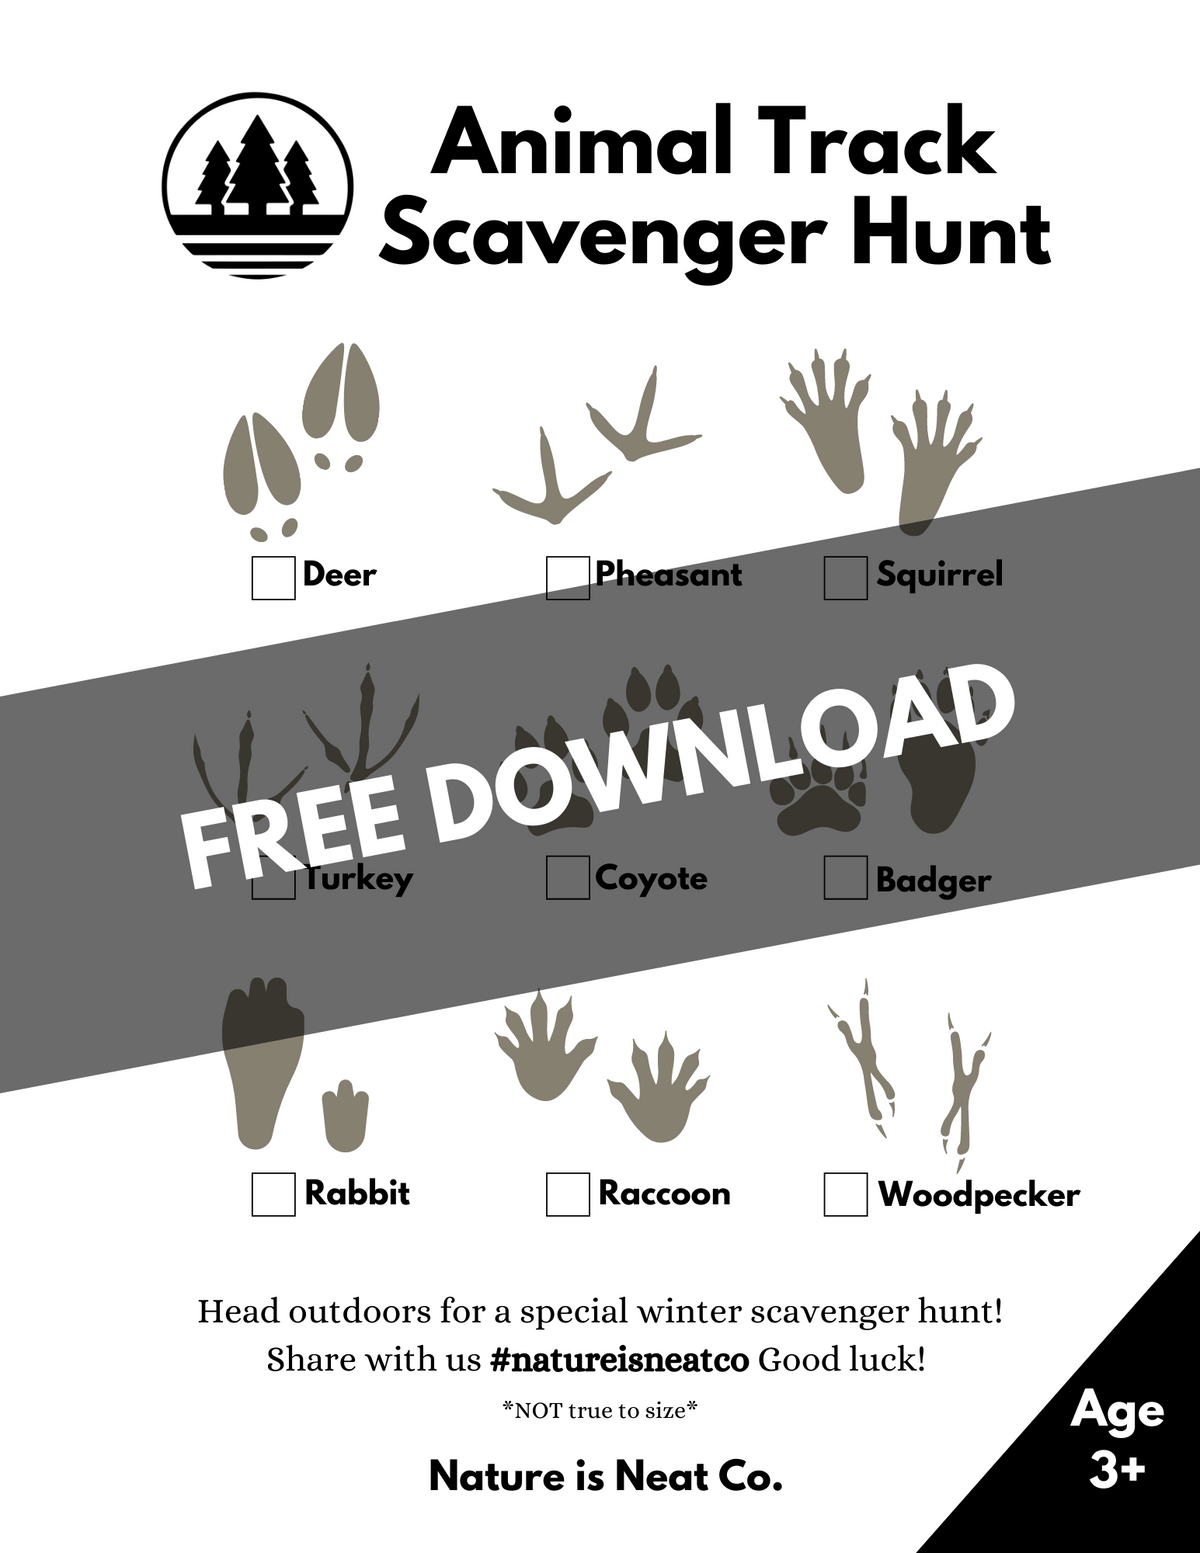 FREE: Animal Track Scavenger Hunt